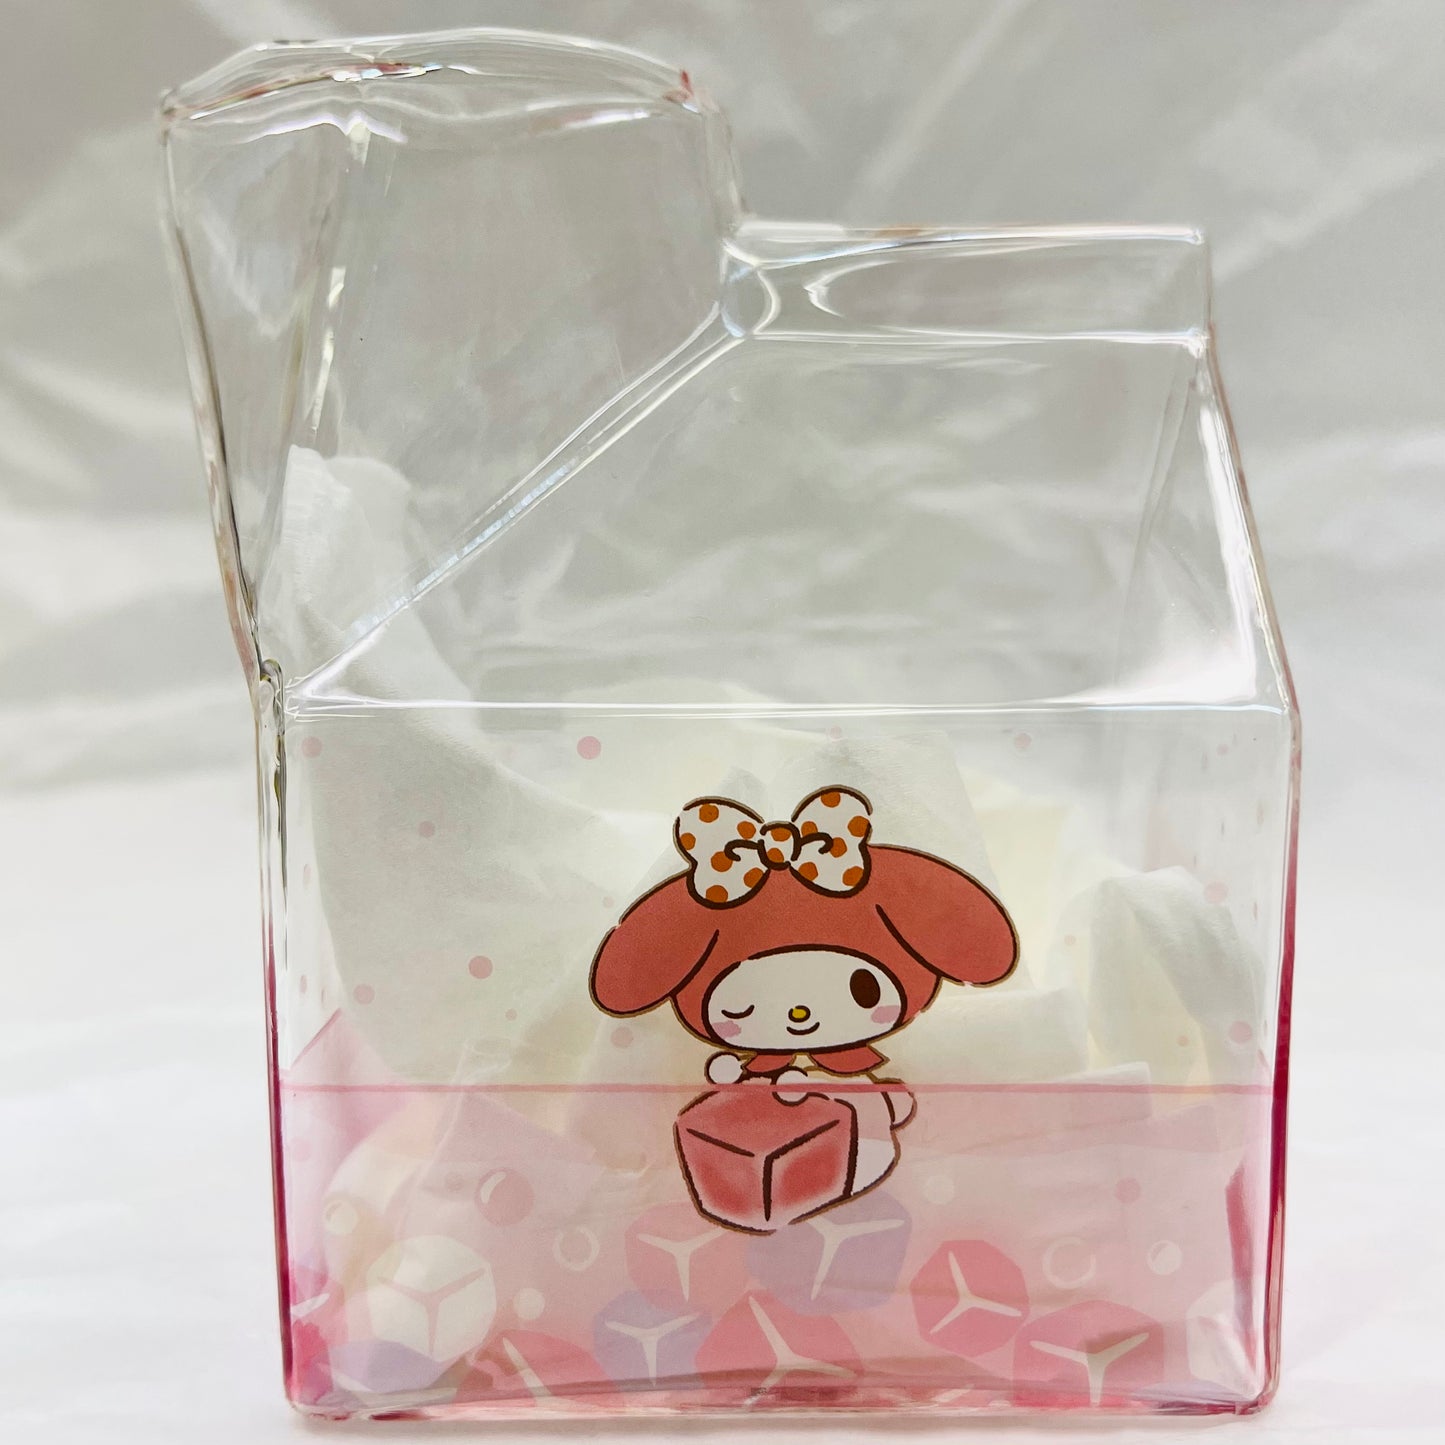 Sanrio Milk Carton Shaped Glass Cup